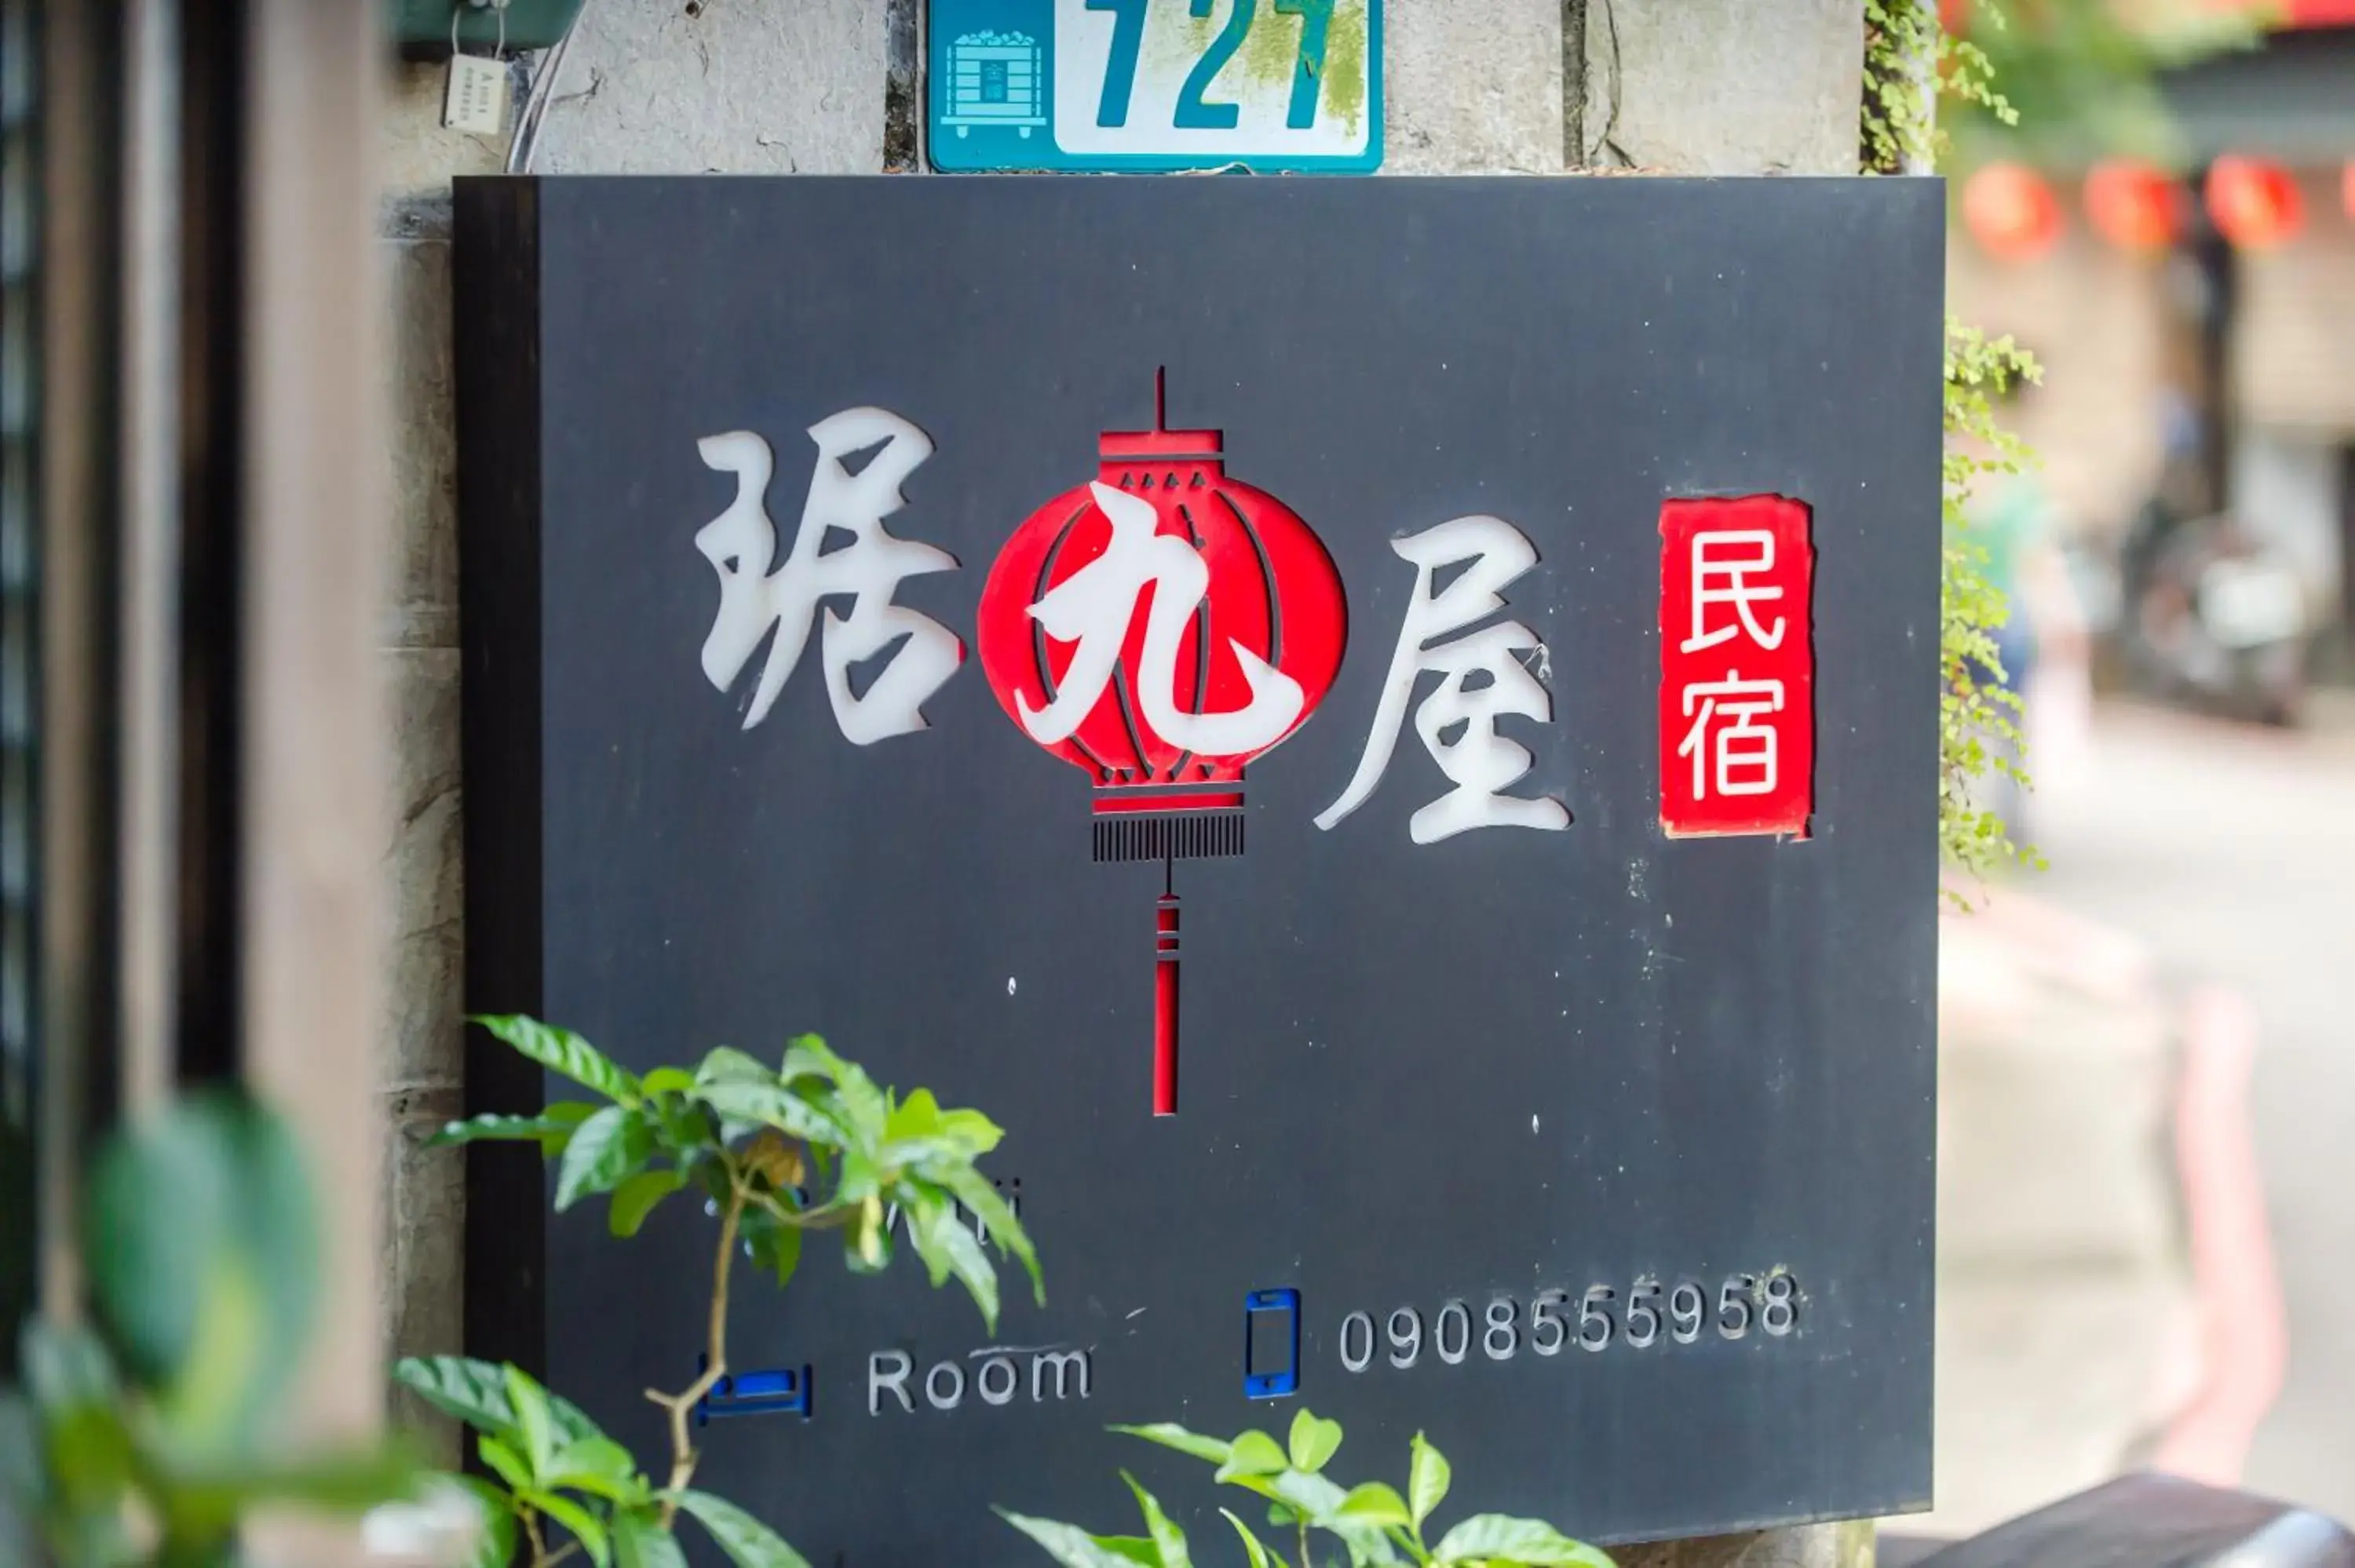 Property logo or sign in Ju jiu House